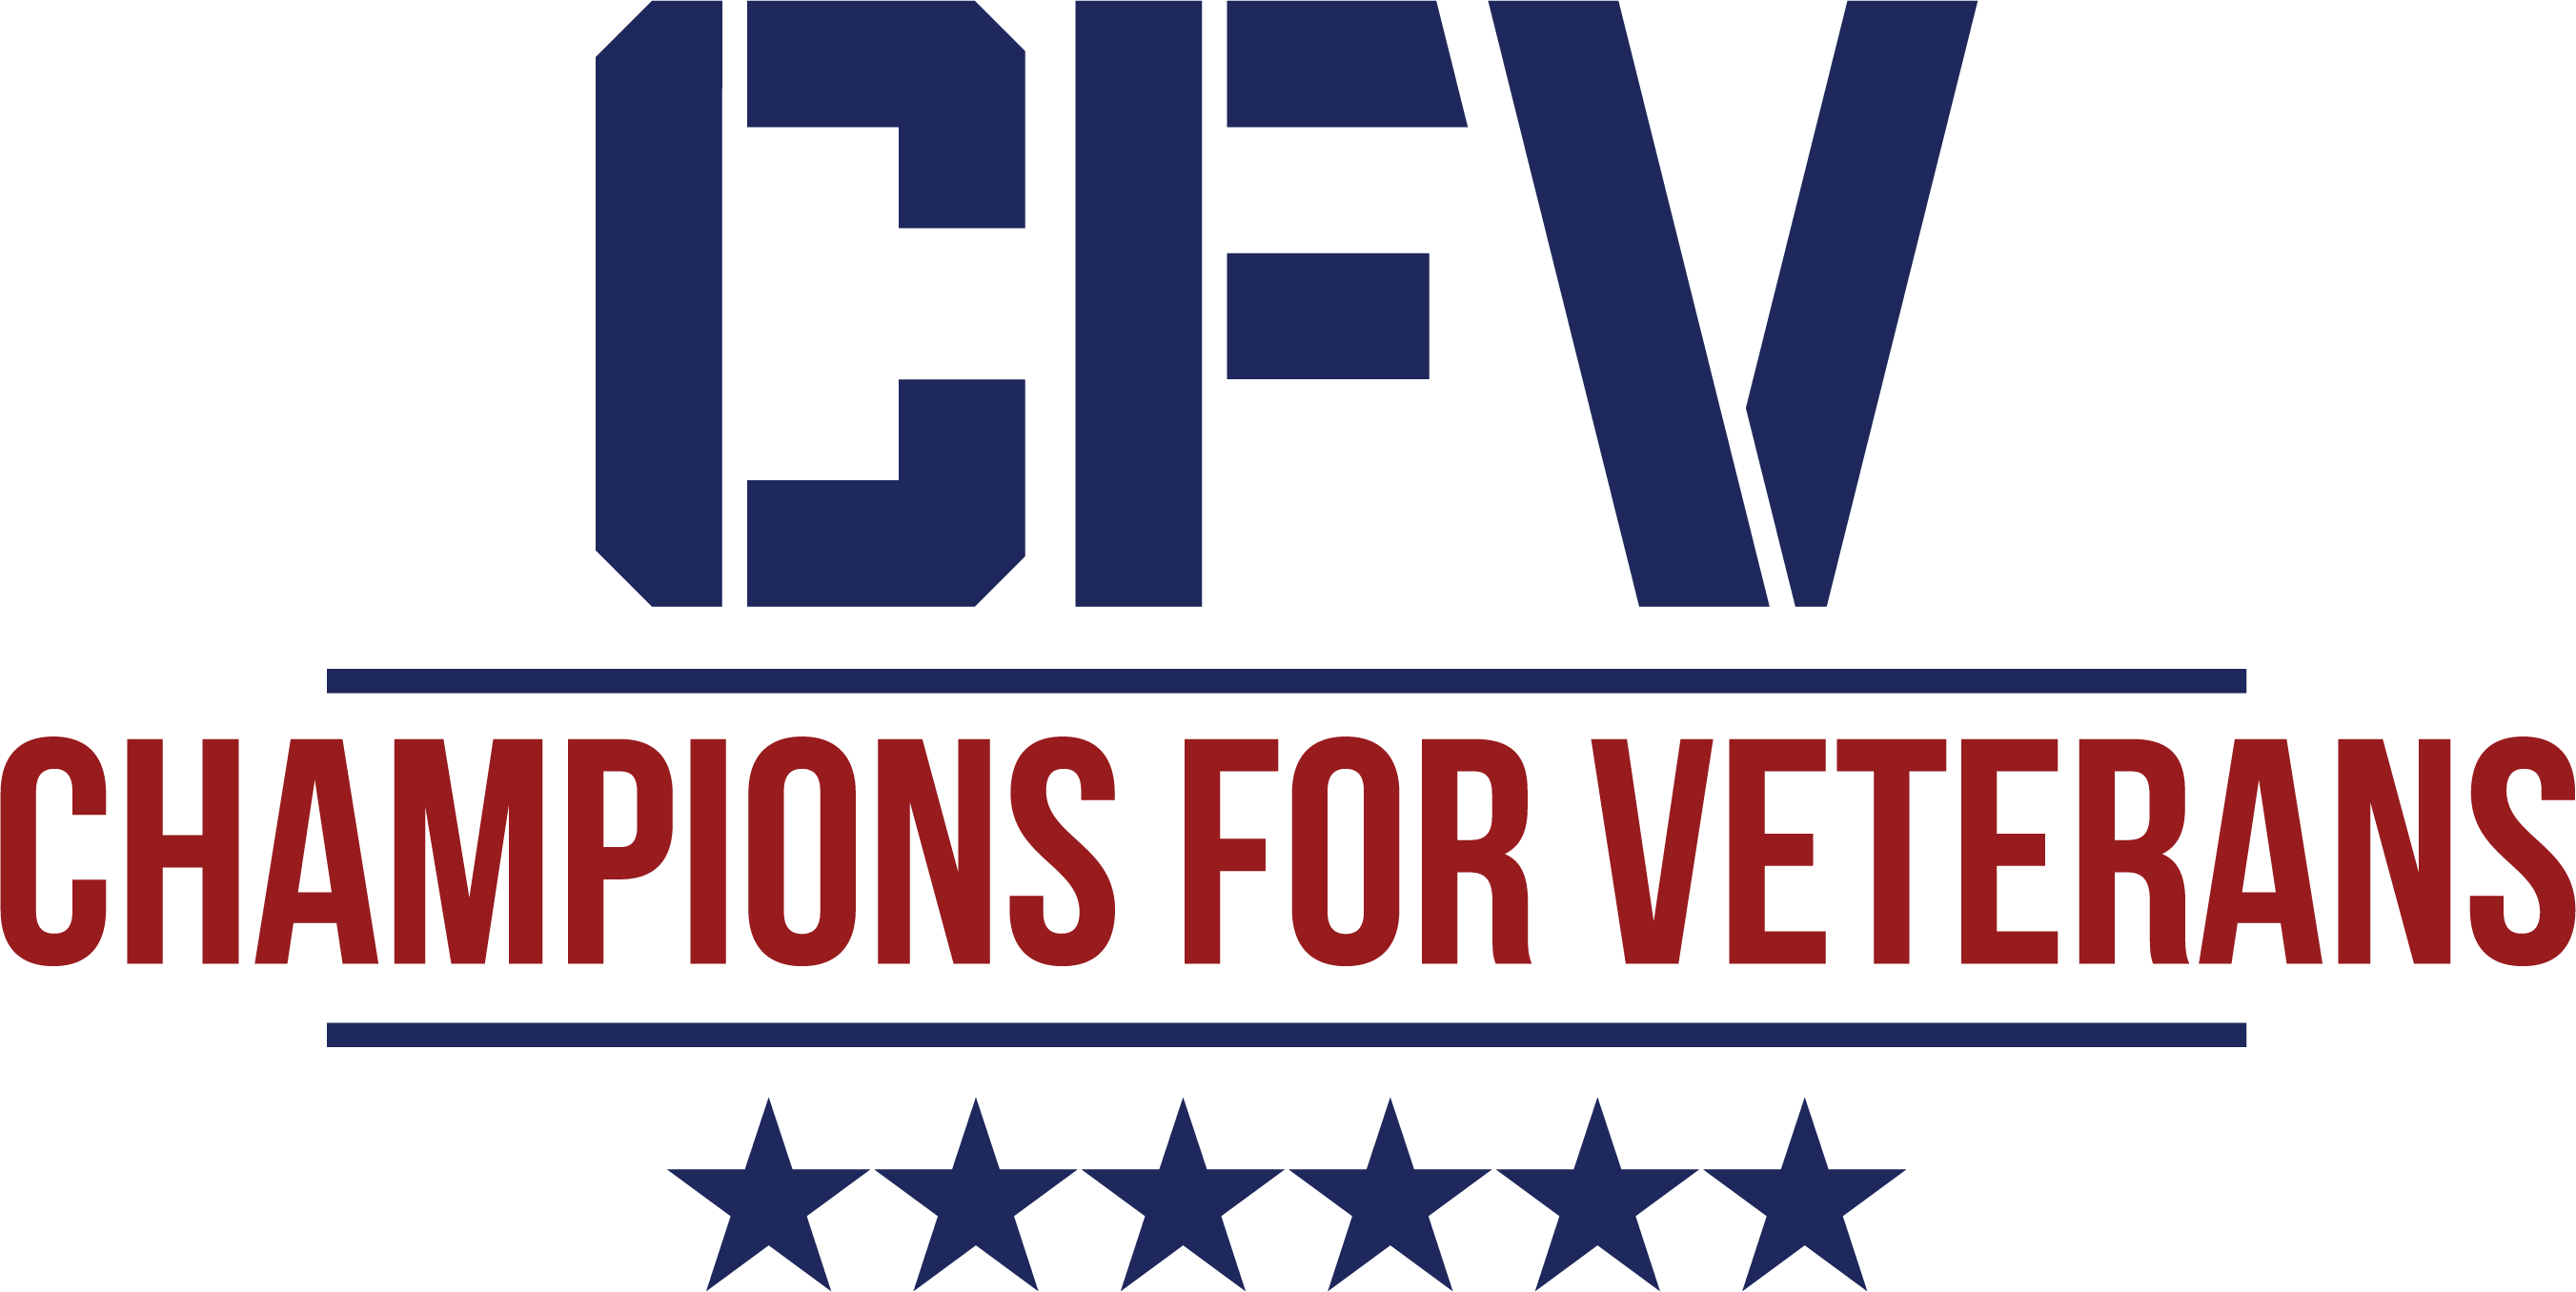 Champions For Veterans Reclaim Your VA Benefits